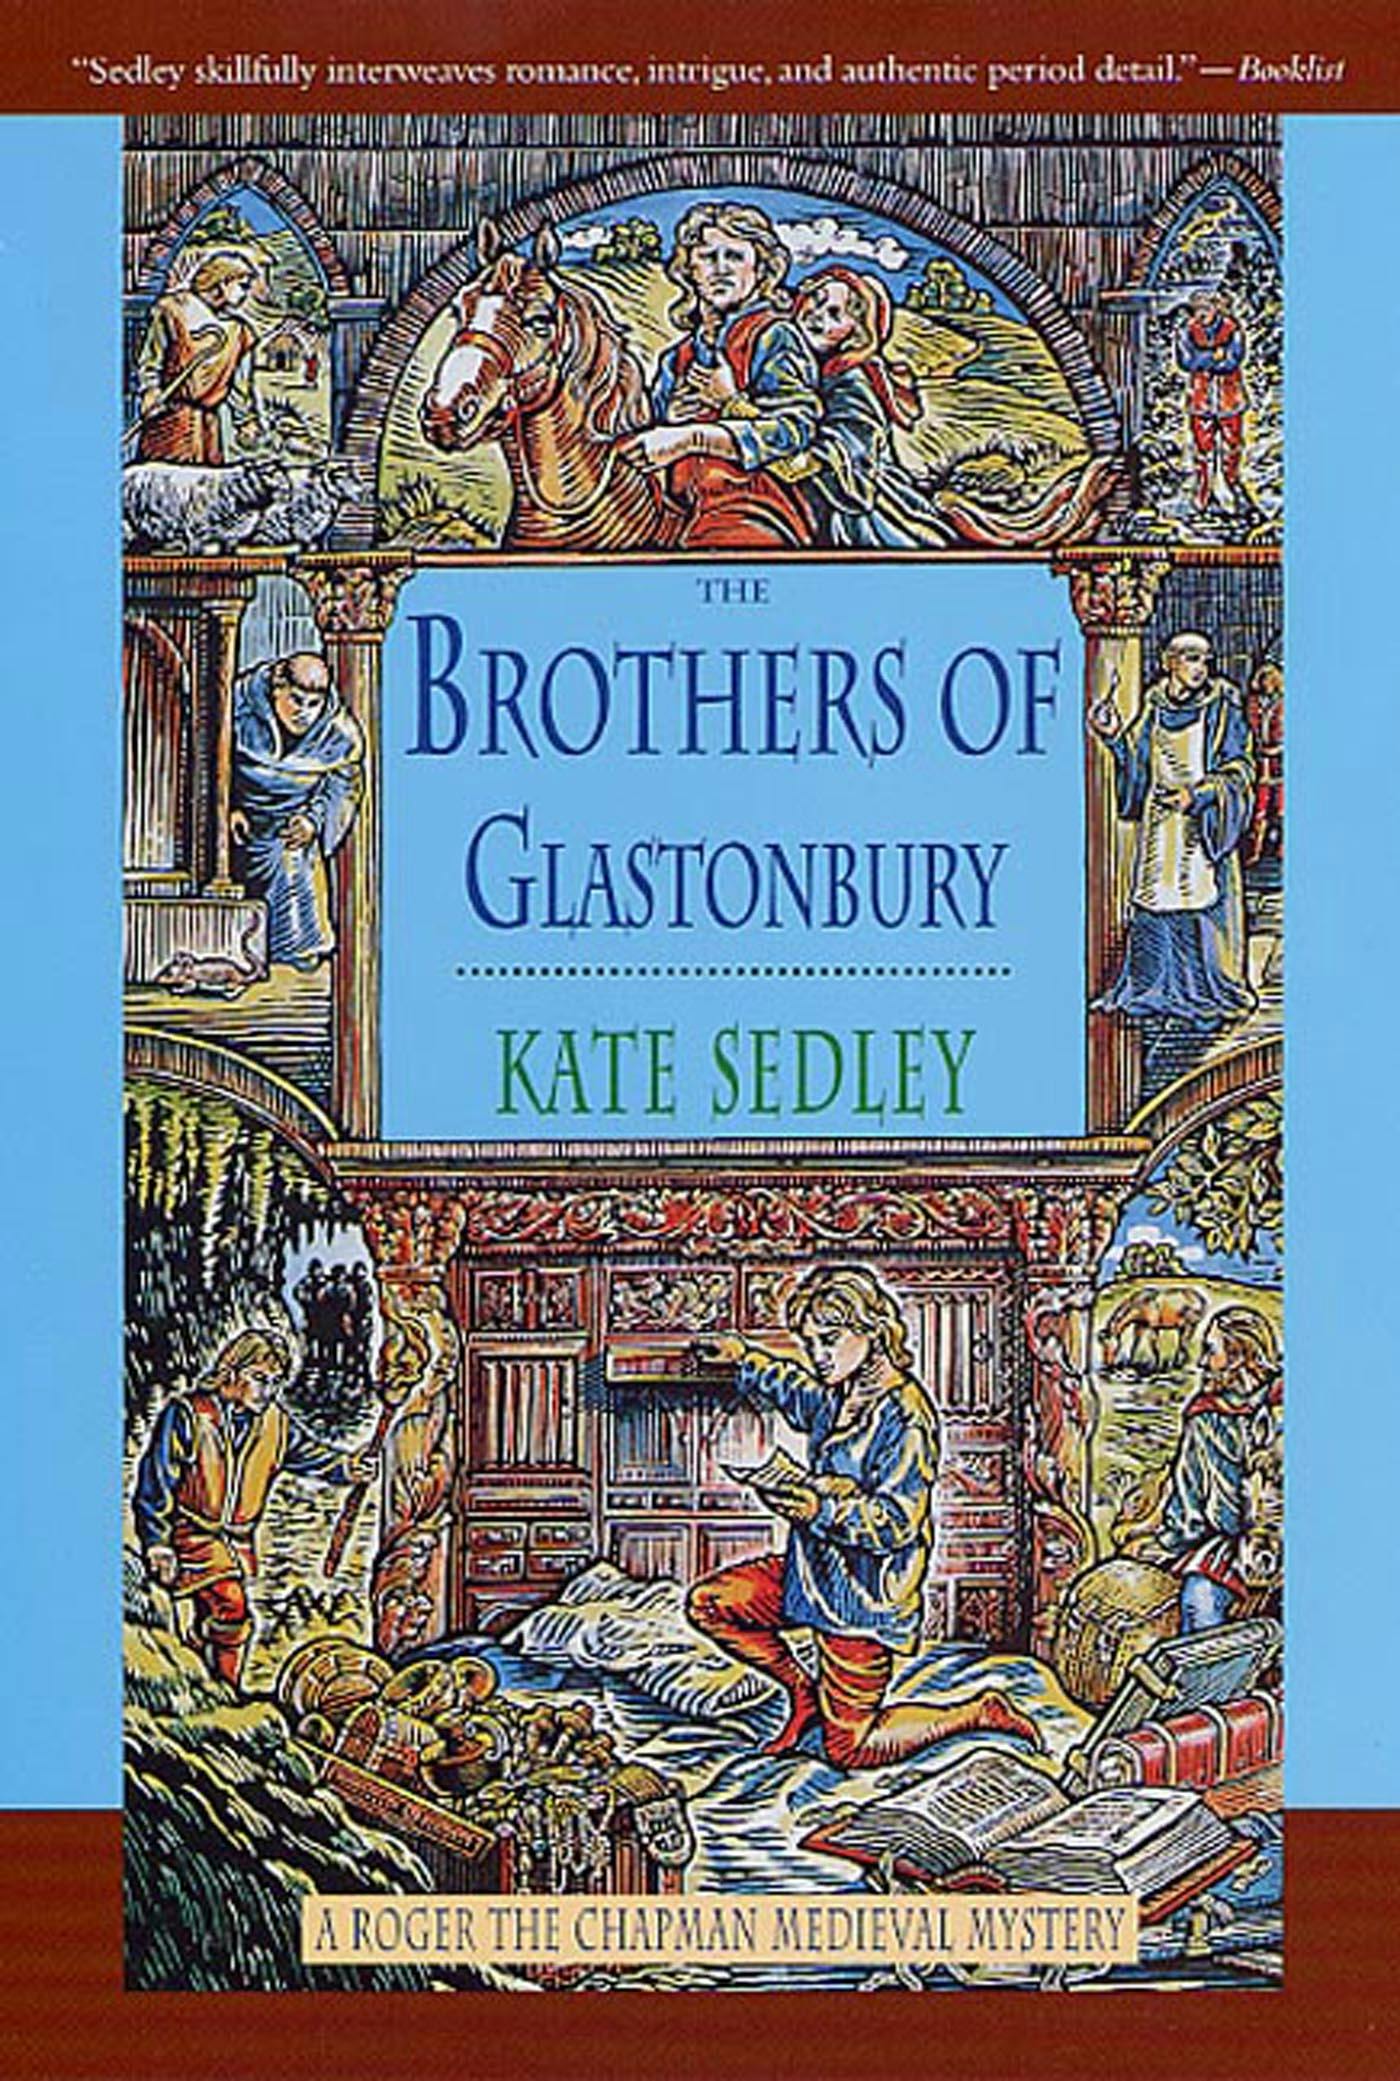 The Brothers of Glastonbury